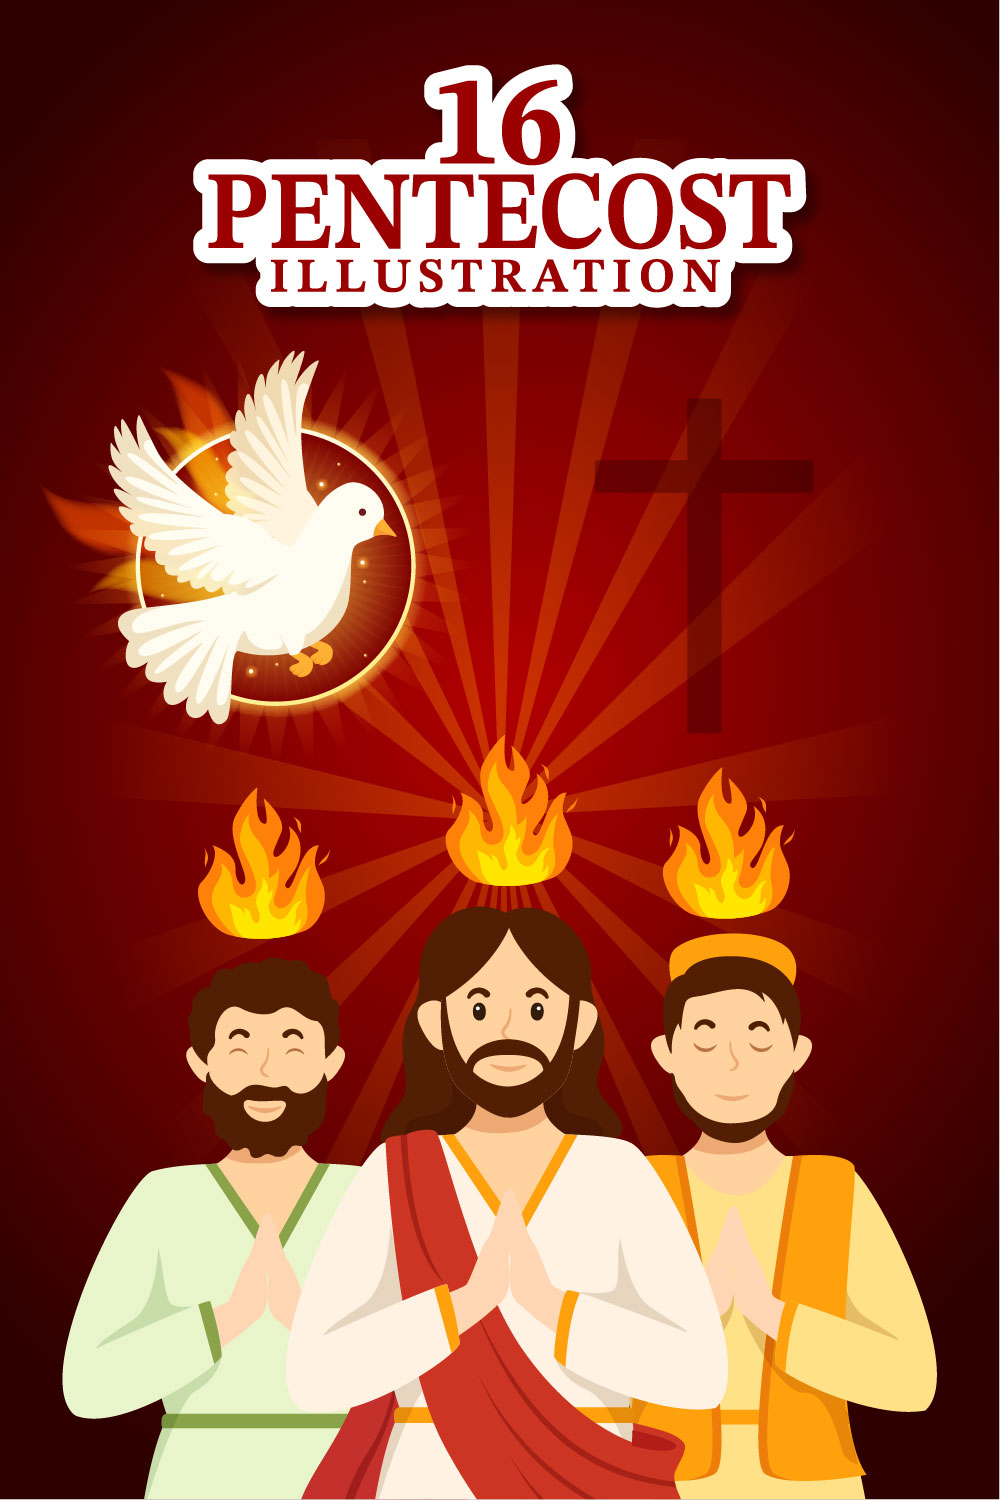 16 Pentecost Sunday Illustration pinterest preview image.